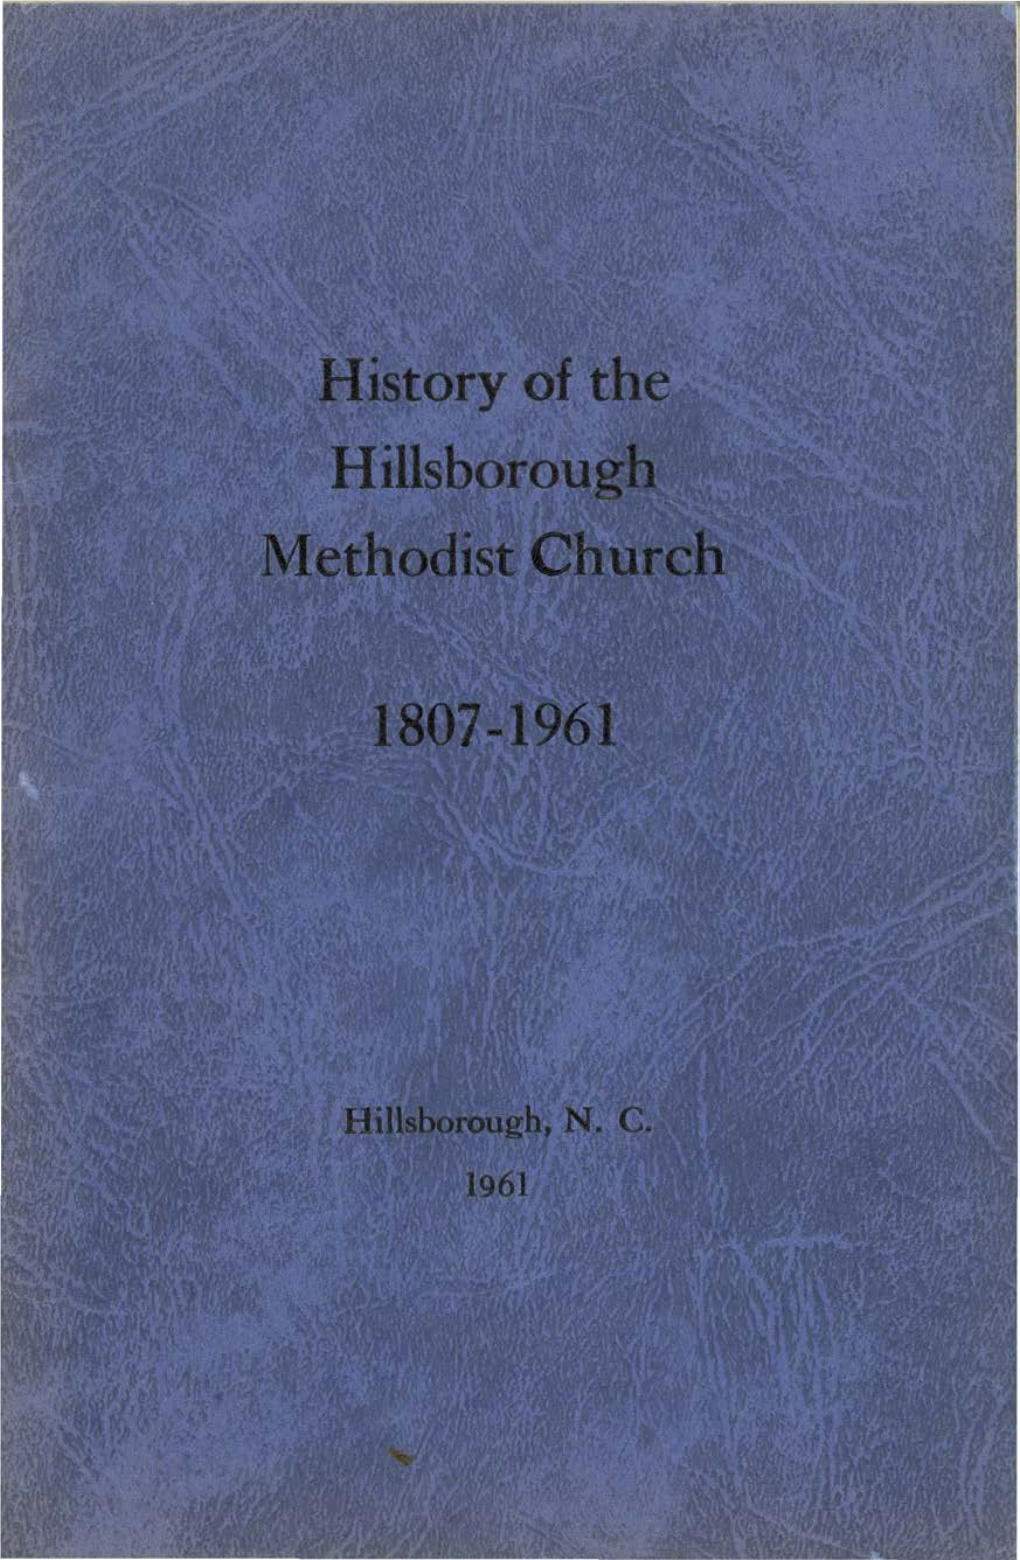 History of the Hillsborough Methodist Church, 1807-1961